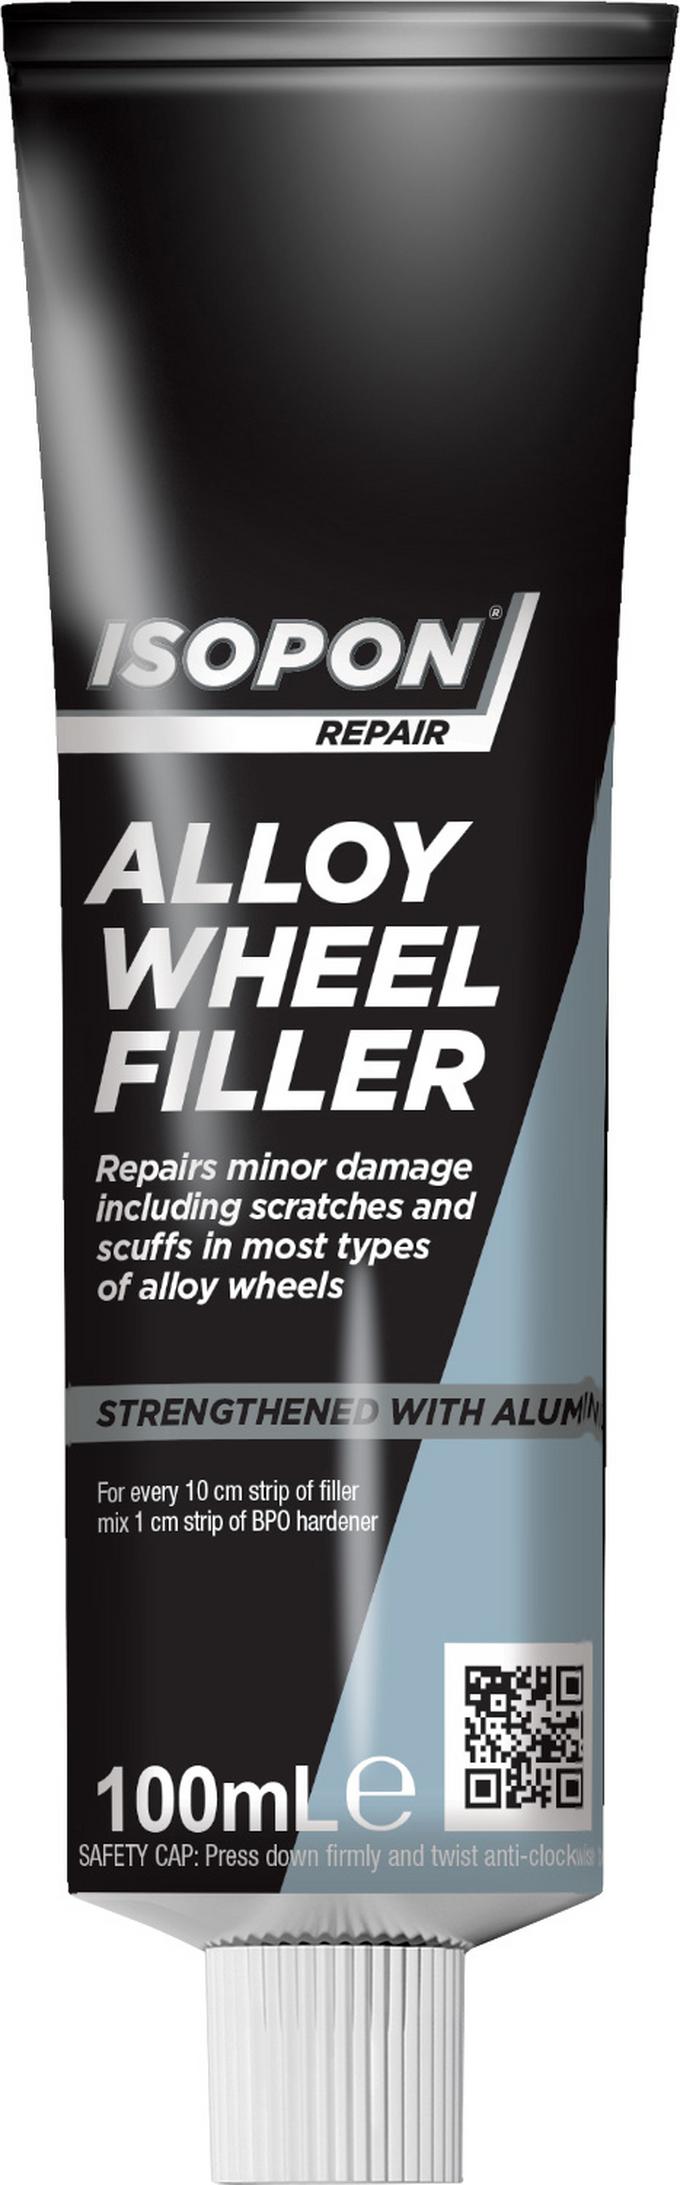 Wheel Repair Kit Aluminum Rim Scratch Repair Auto Car Motorcycle Hubcaps  Covers Paint Surface Damage Dent Care Agent